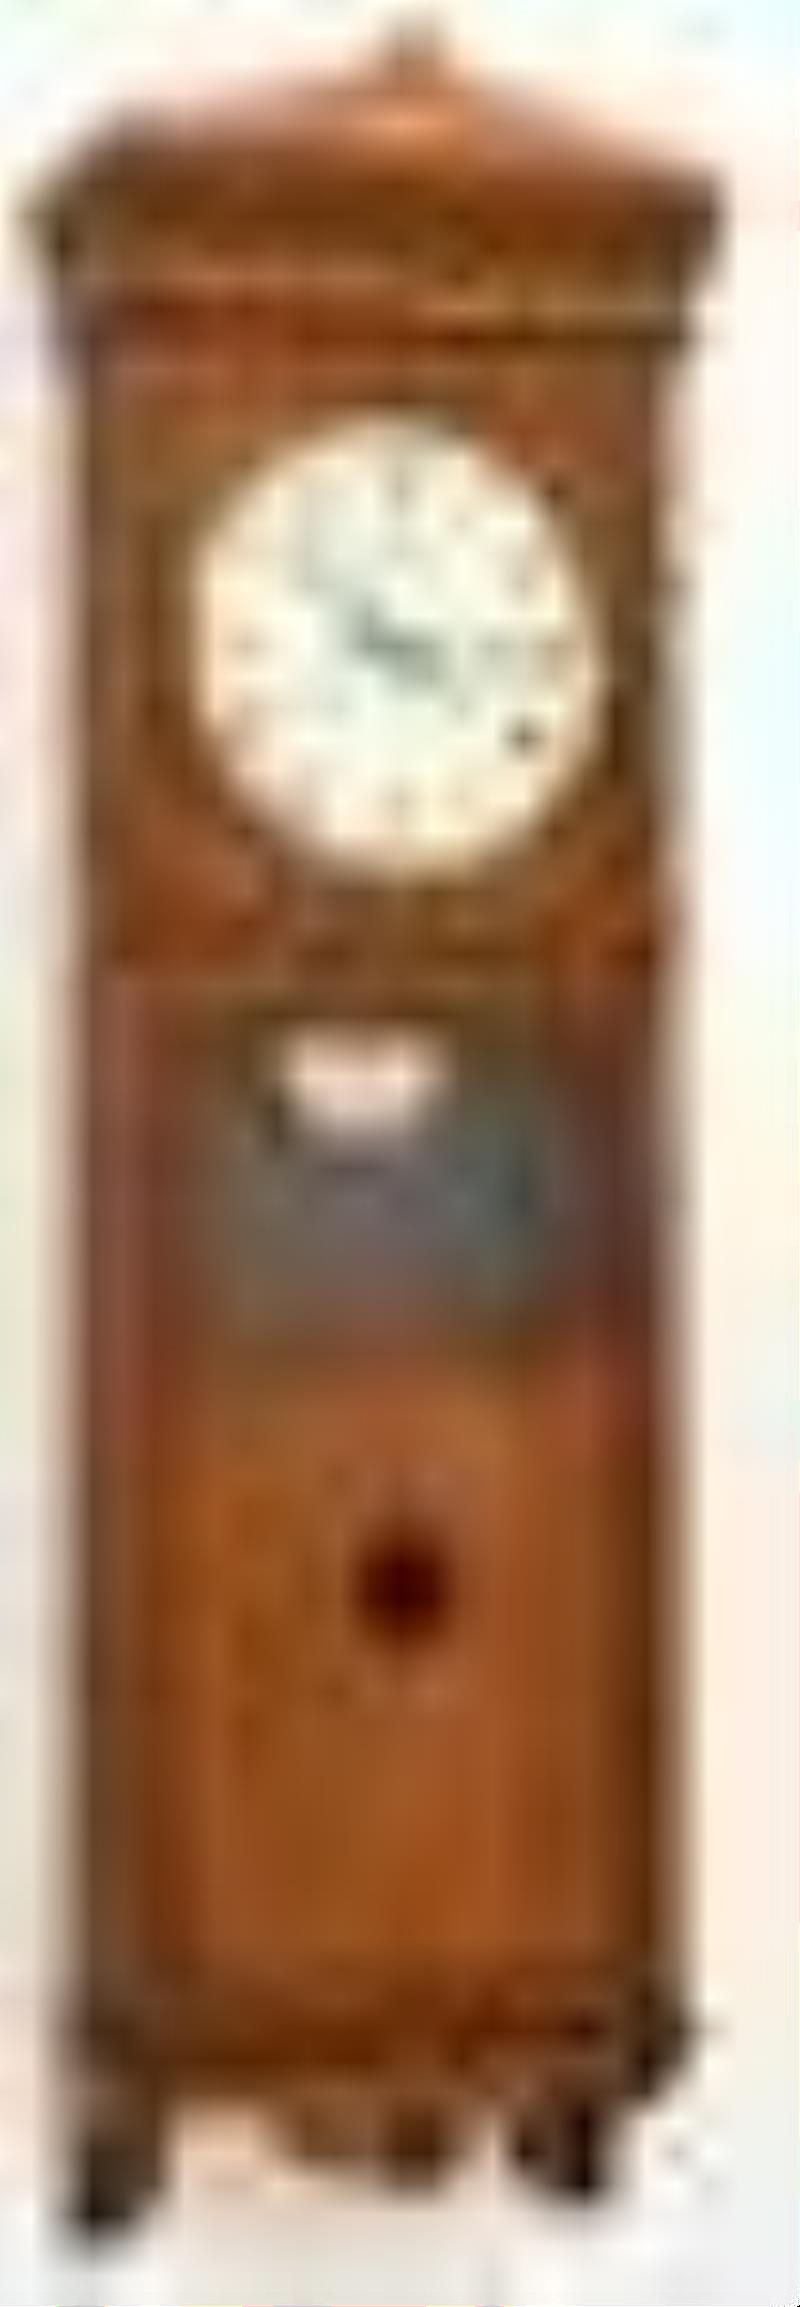 Bundy Mfg. Co. Time Recorder Clock